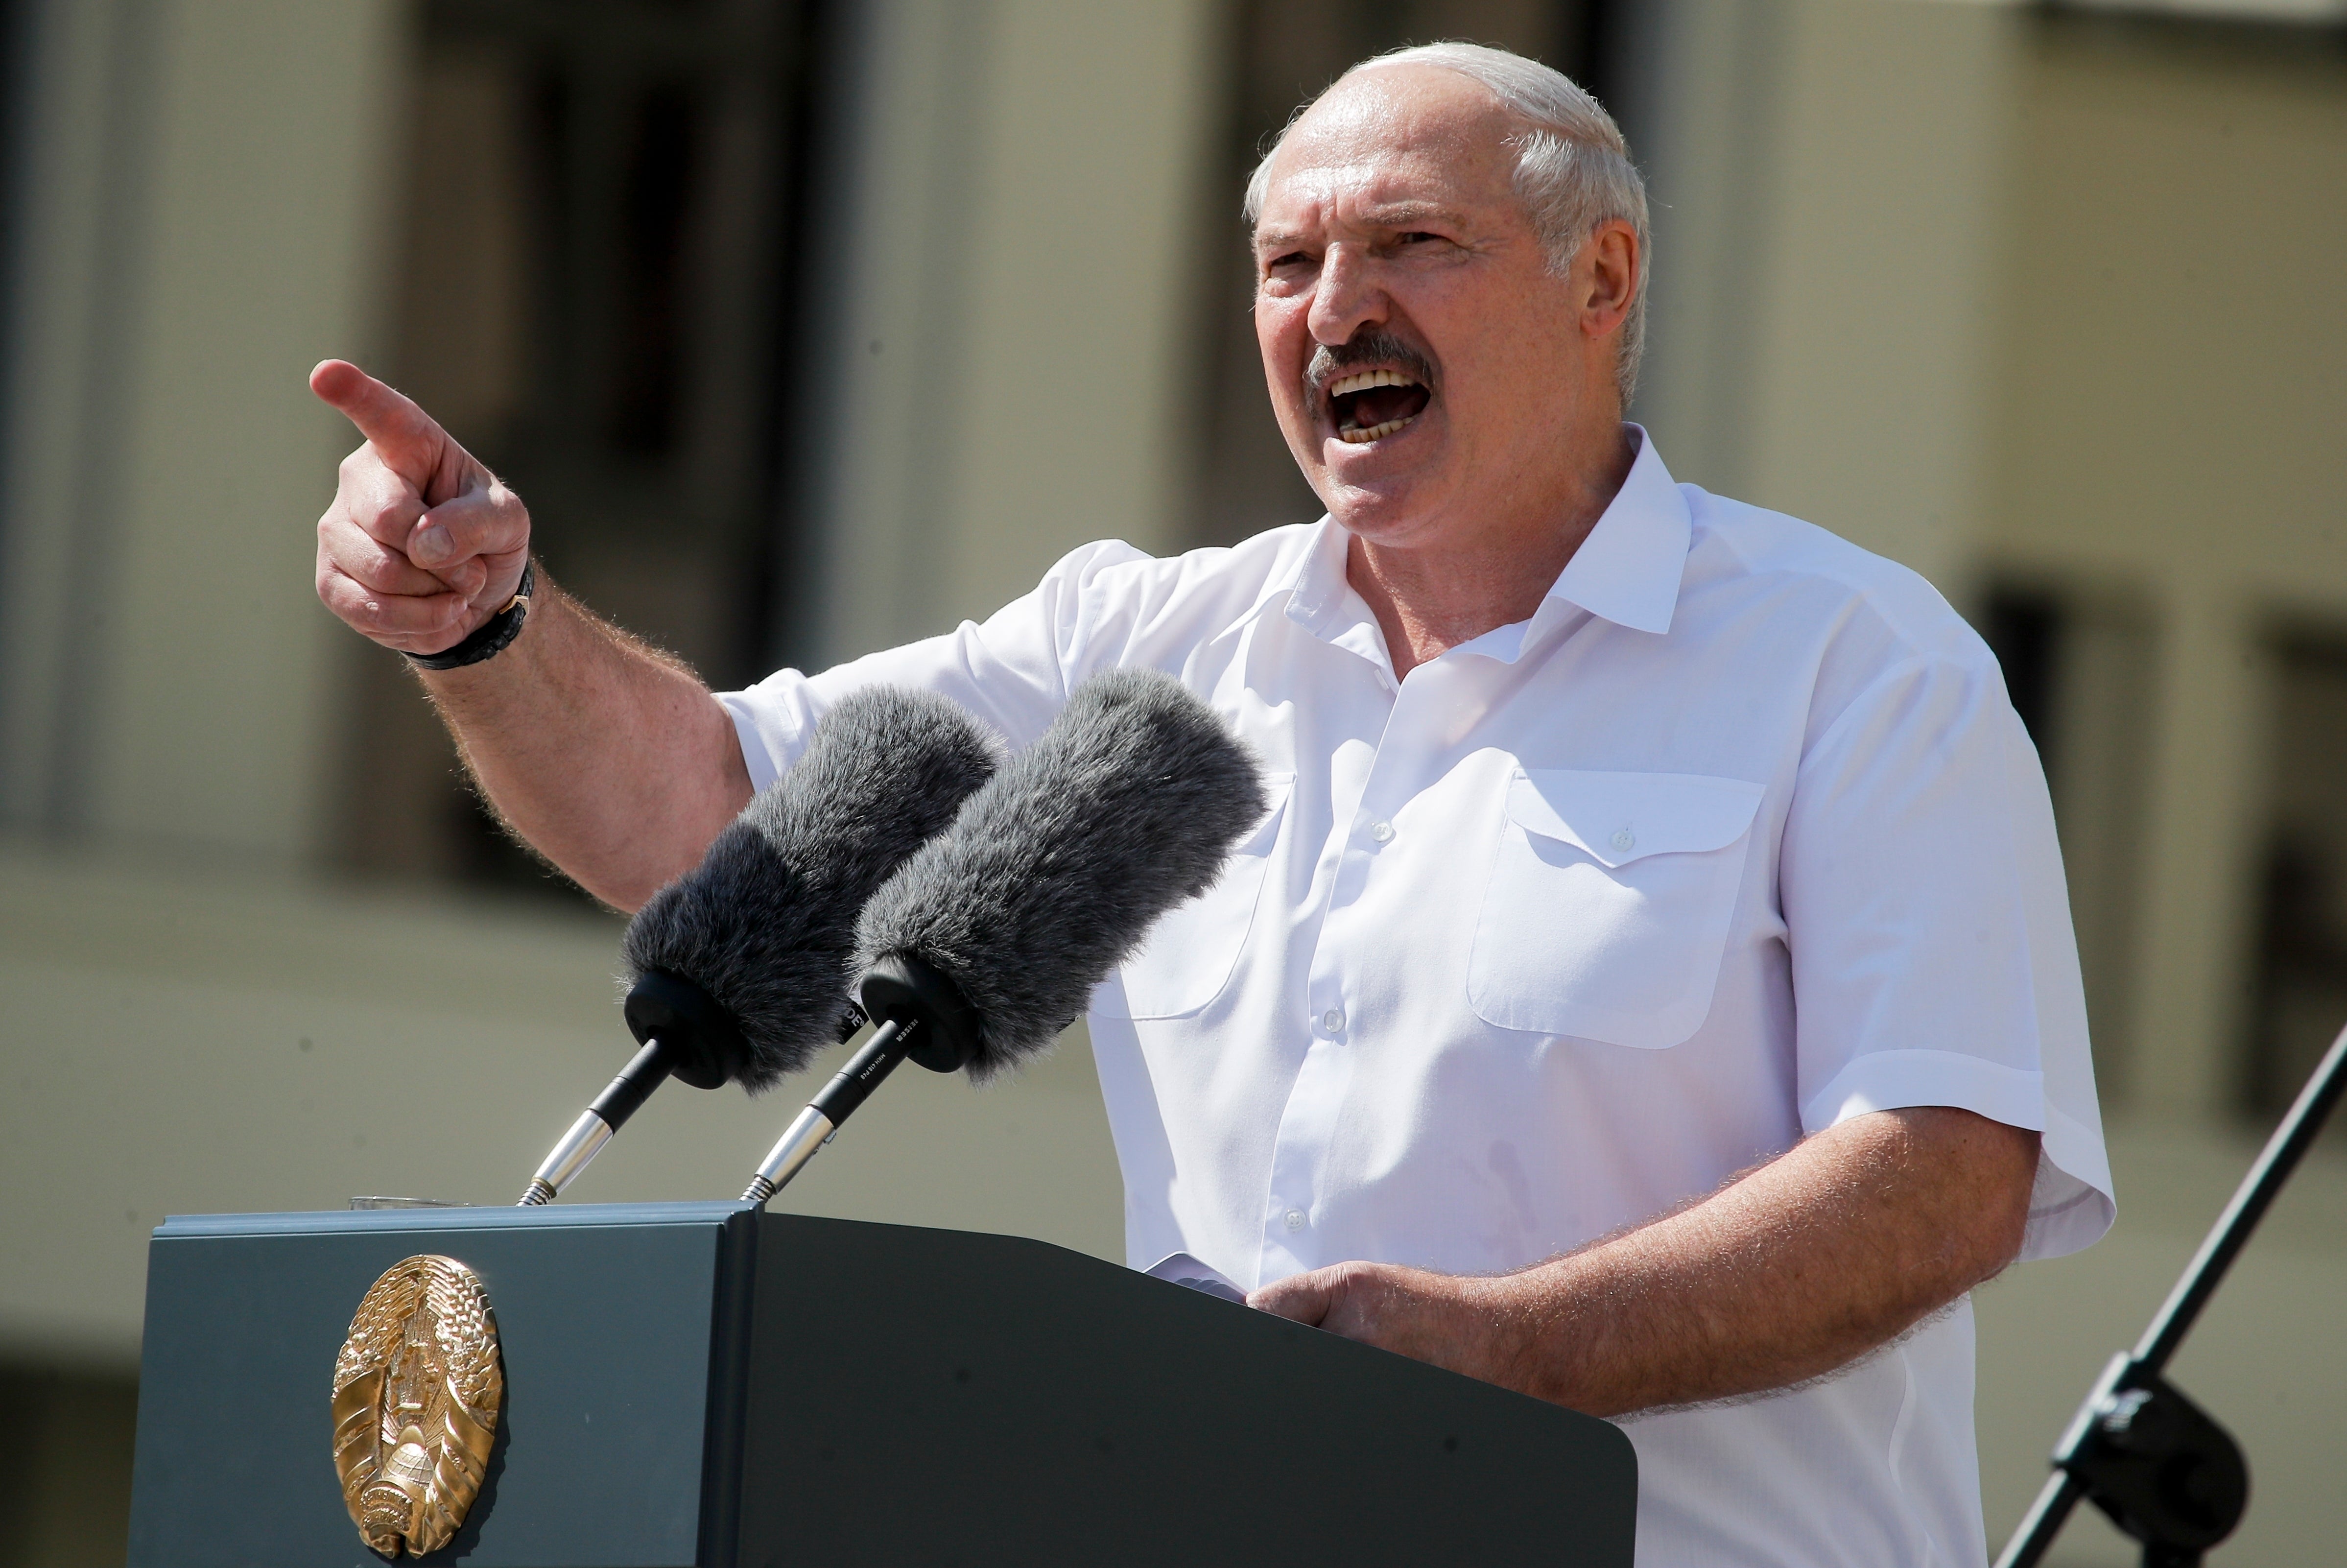 President Lukashenko said Belarus has no interest in threatening the west